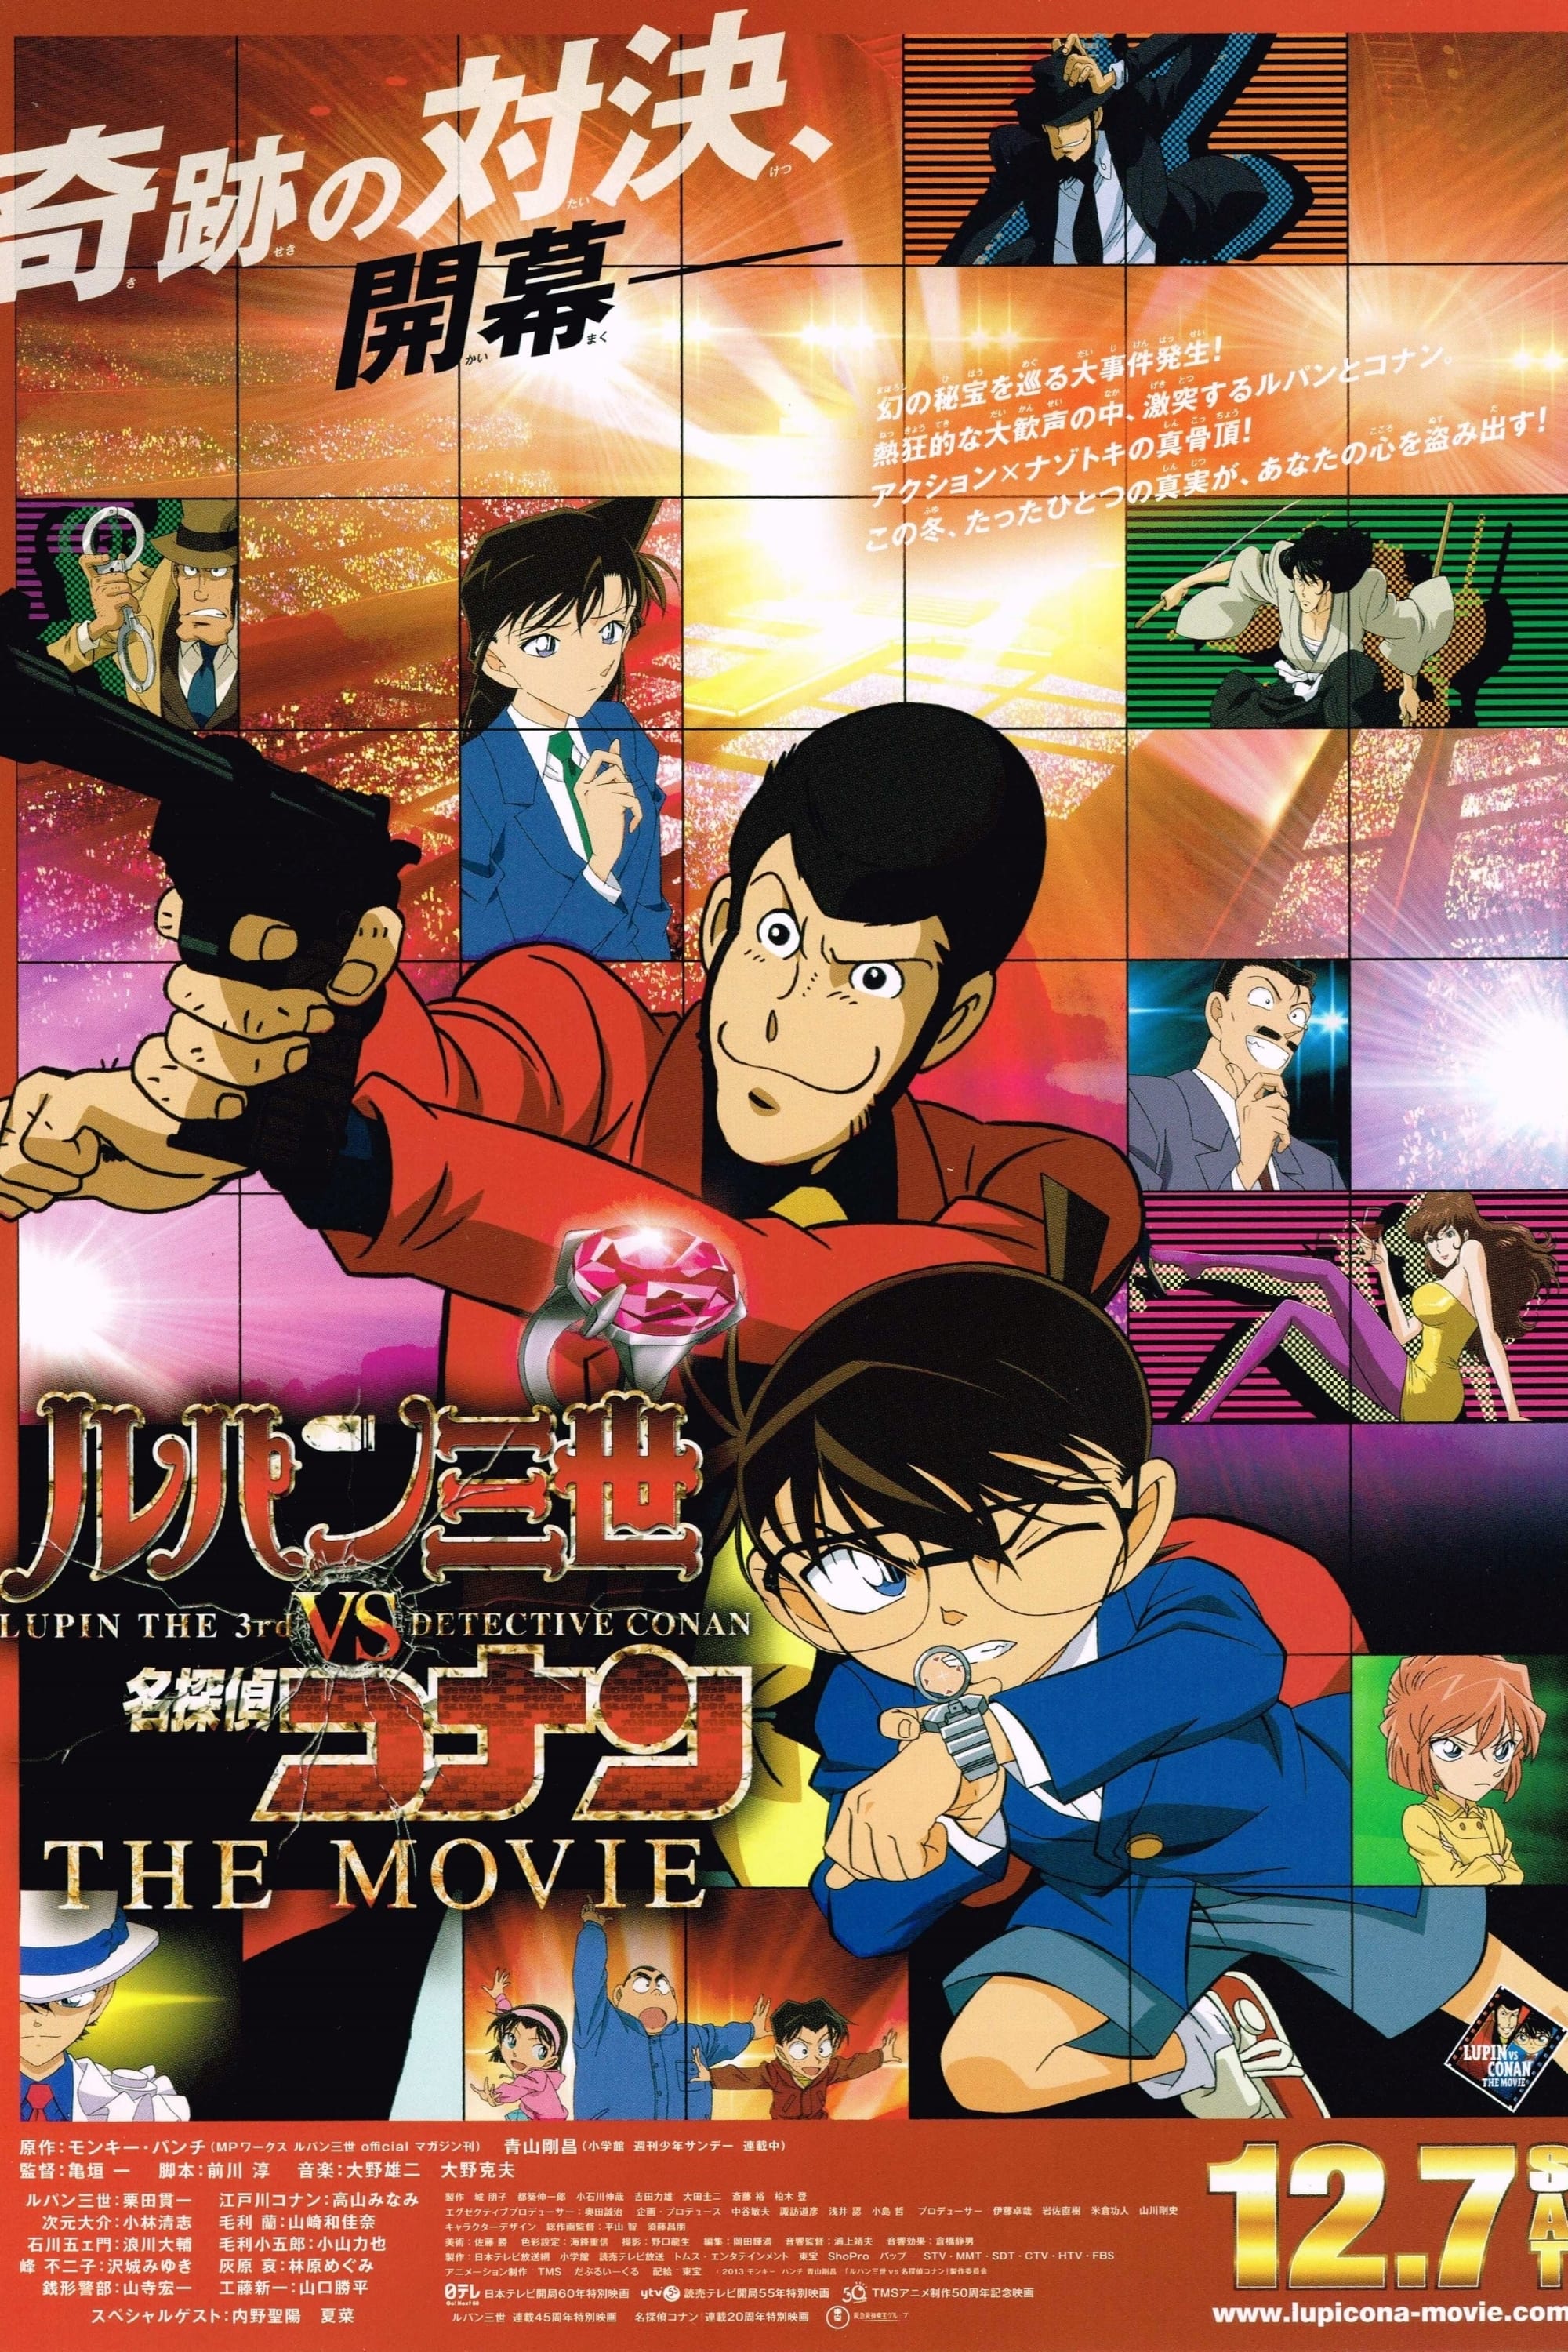 Lupin III vs. Detective Conan: The Movie | Lupin III Wiki | Fandom